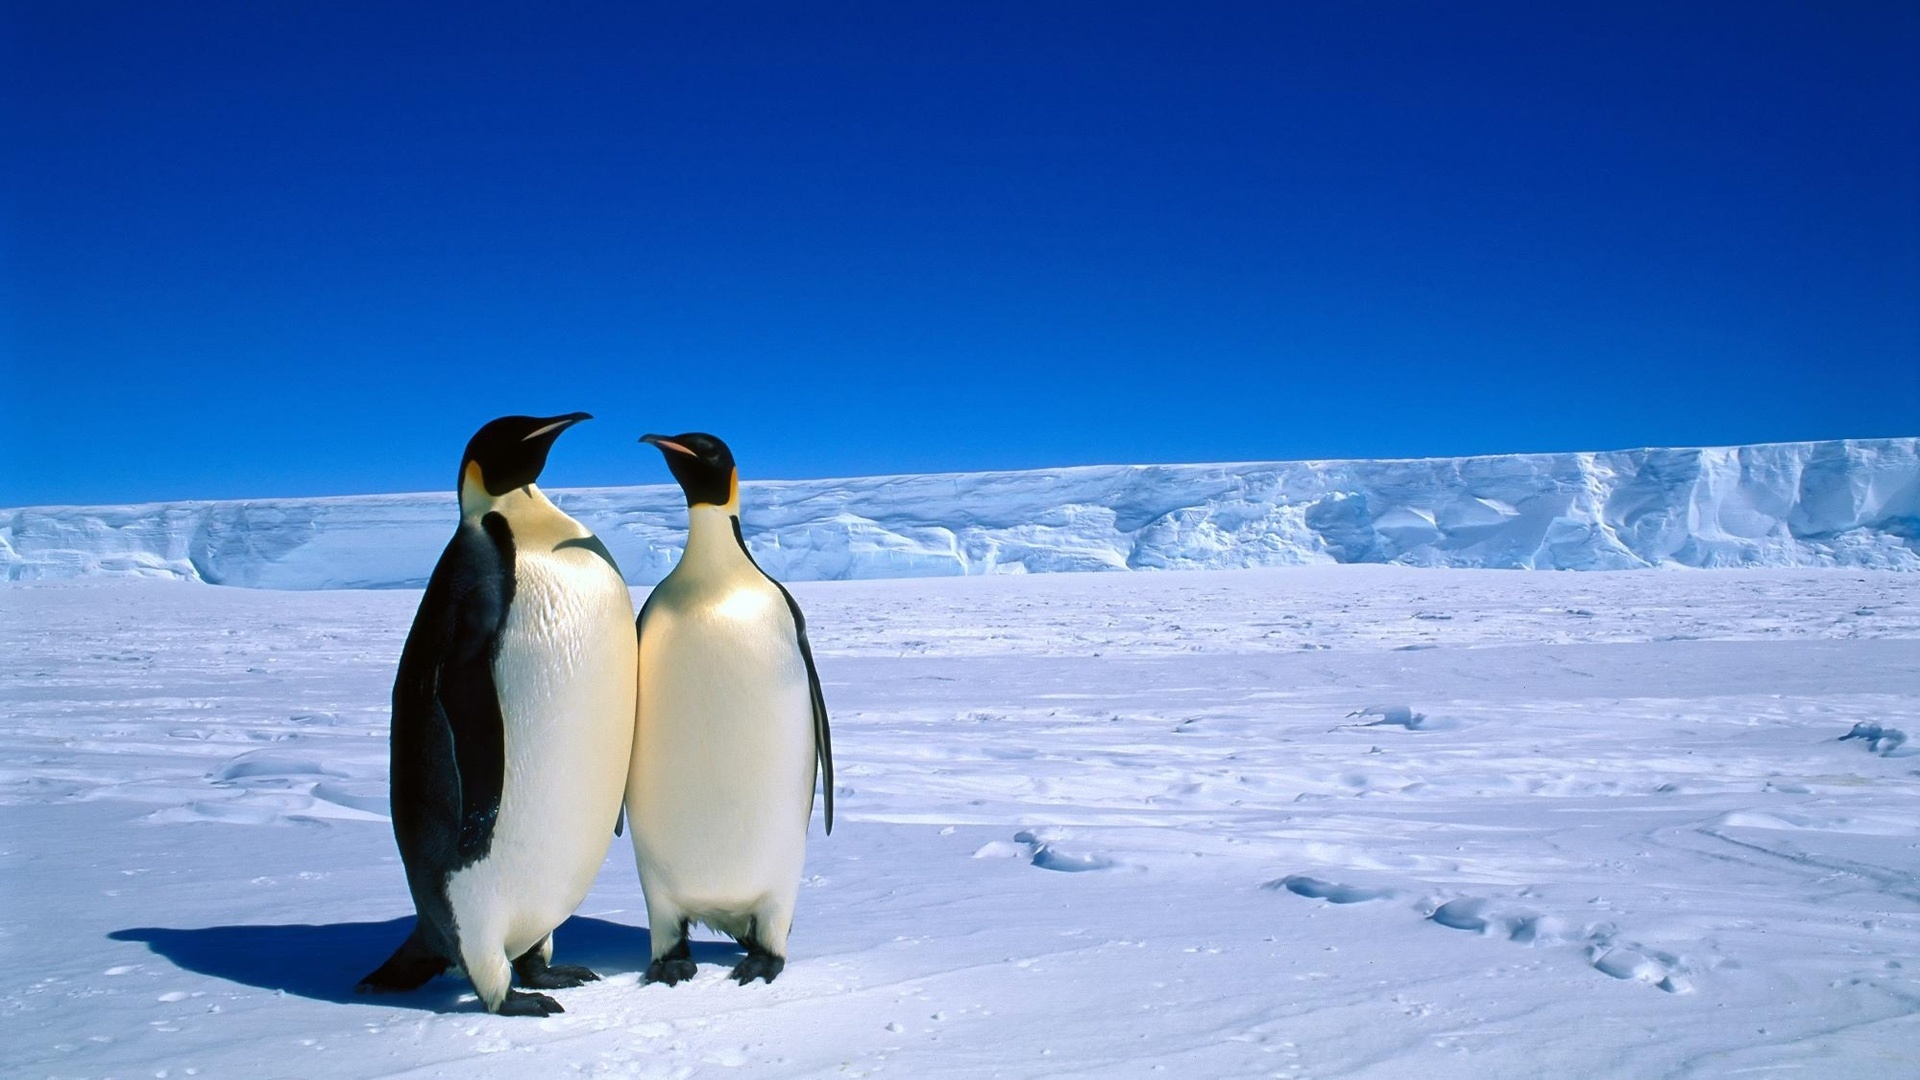 Penguins in Antarctica for 1920 x 1080 HDTV 1080p resolution